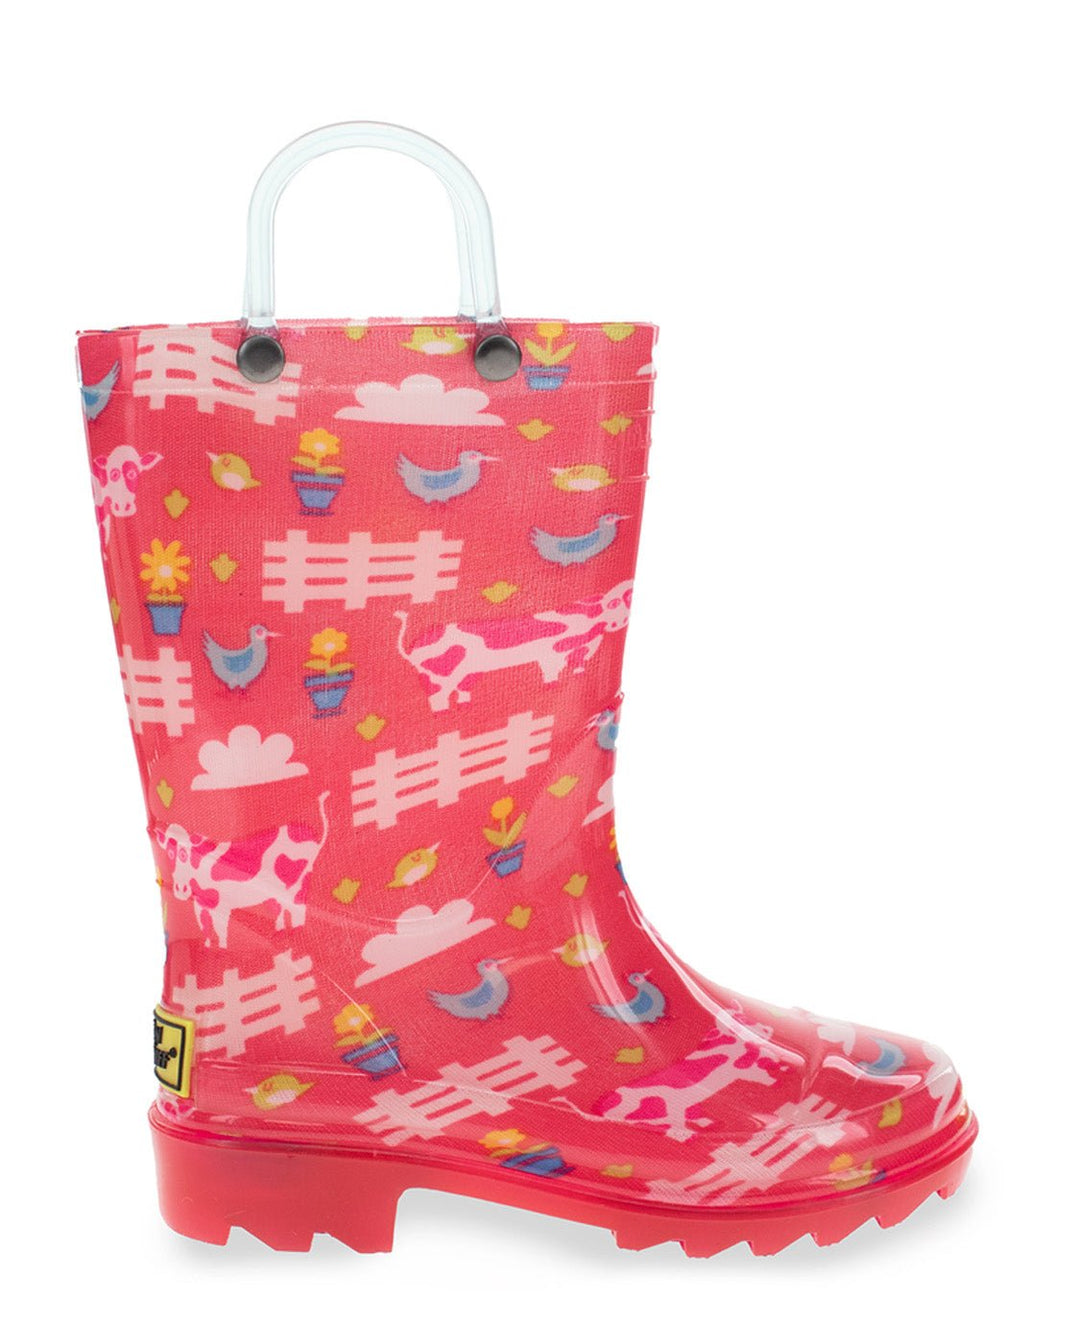 Kids Farm Friends Lighted Rain Boot - Pink - Western Chief